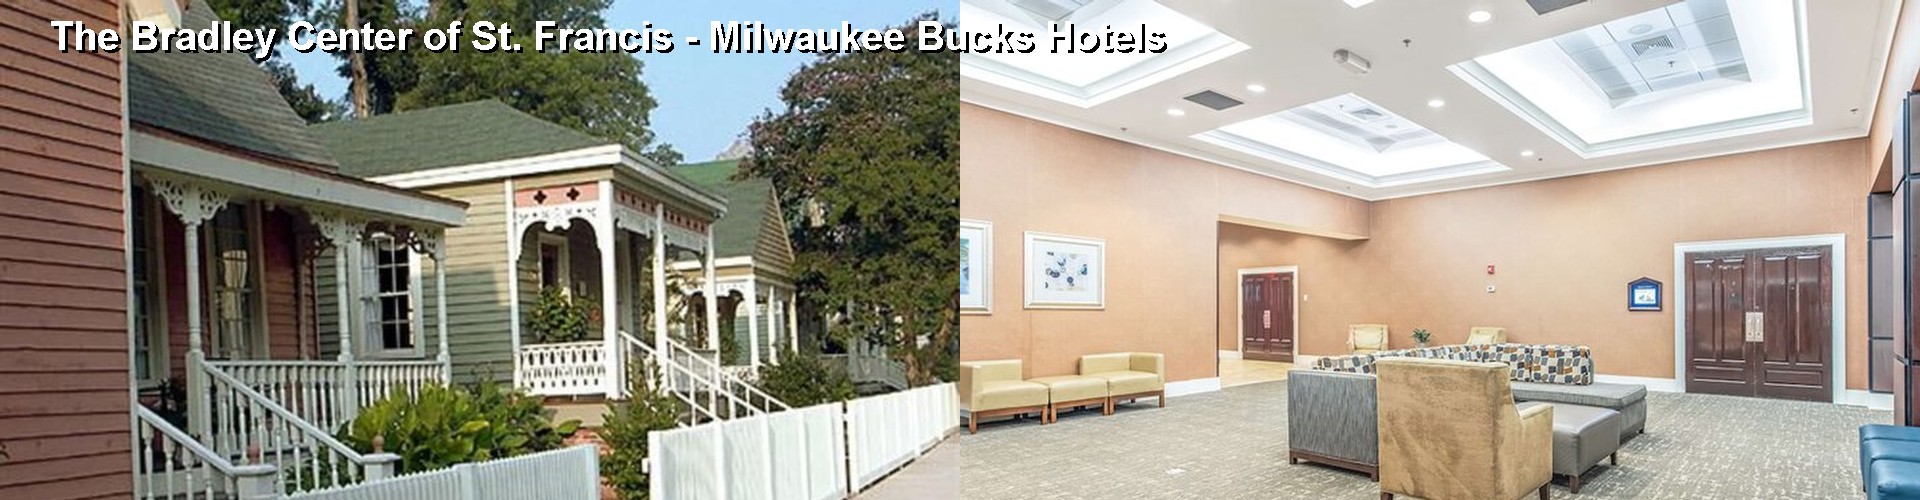 2 Best Hotels near The Bradley Center of St. Francis - Milwaukee Bucks